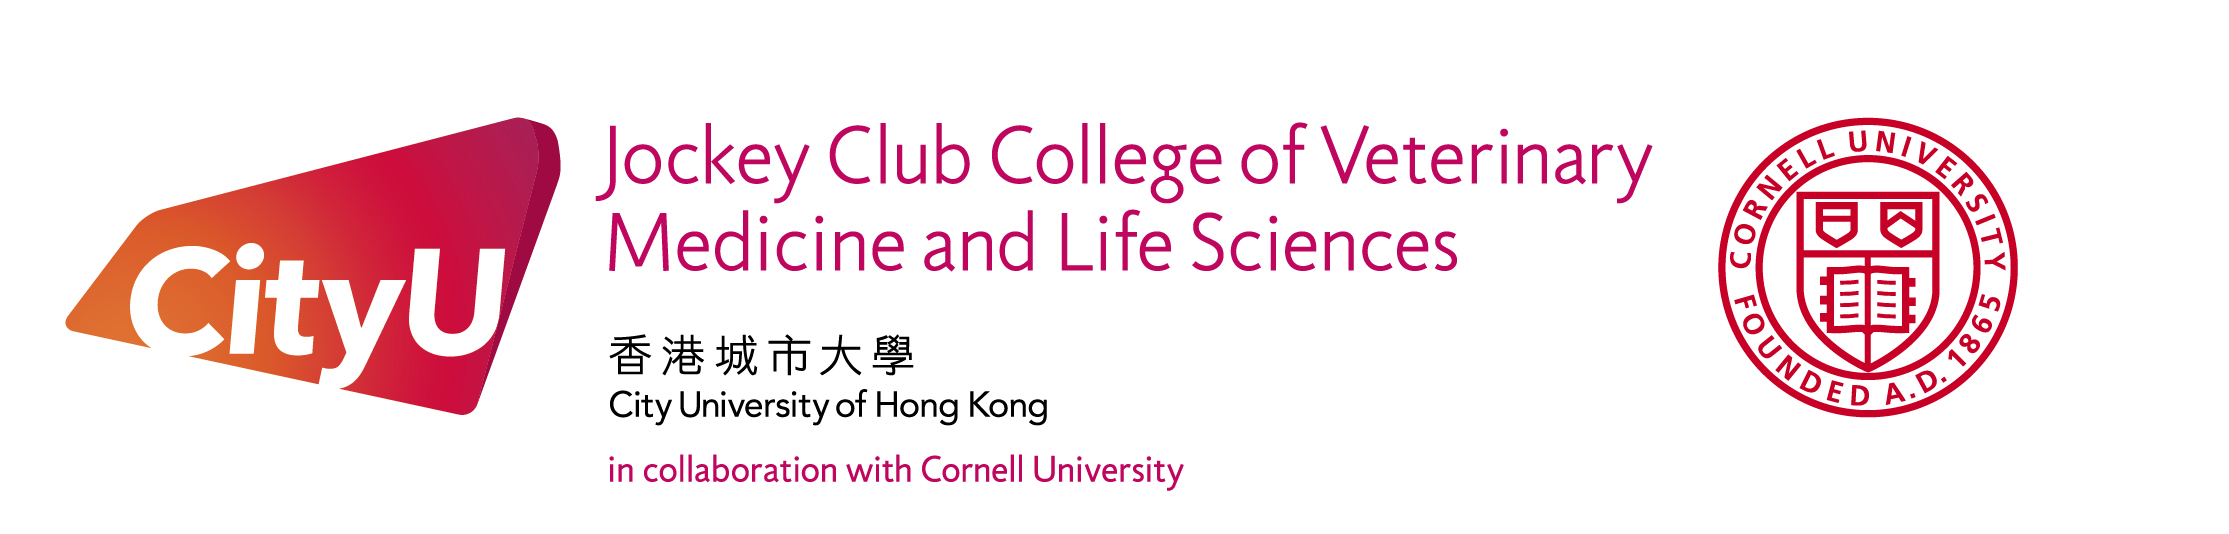 Jockey Club College of Veterinary Medicine and Life Sciences